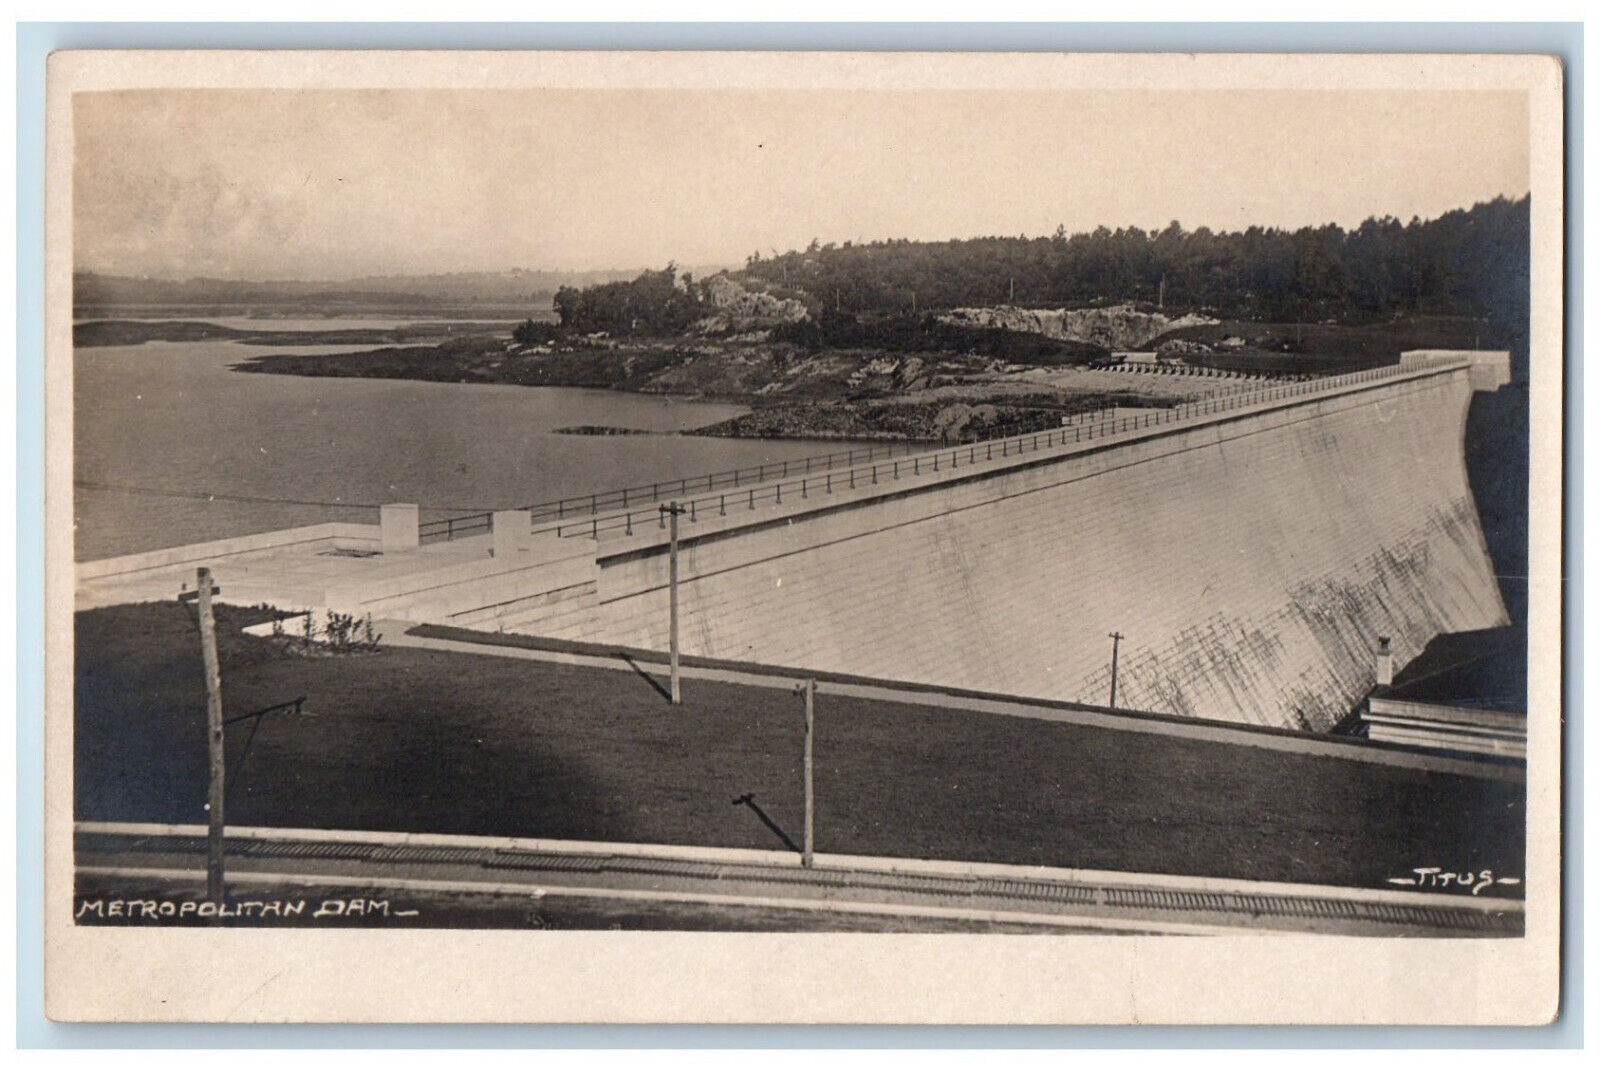 Clinton Massachusetts MA Postcard Wachusett Metropolitan Dam c1930's RPPC Photo